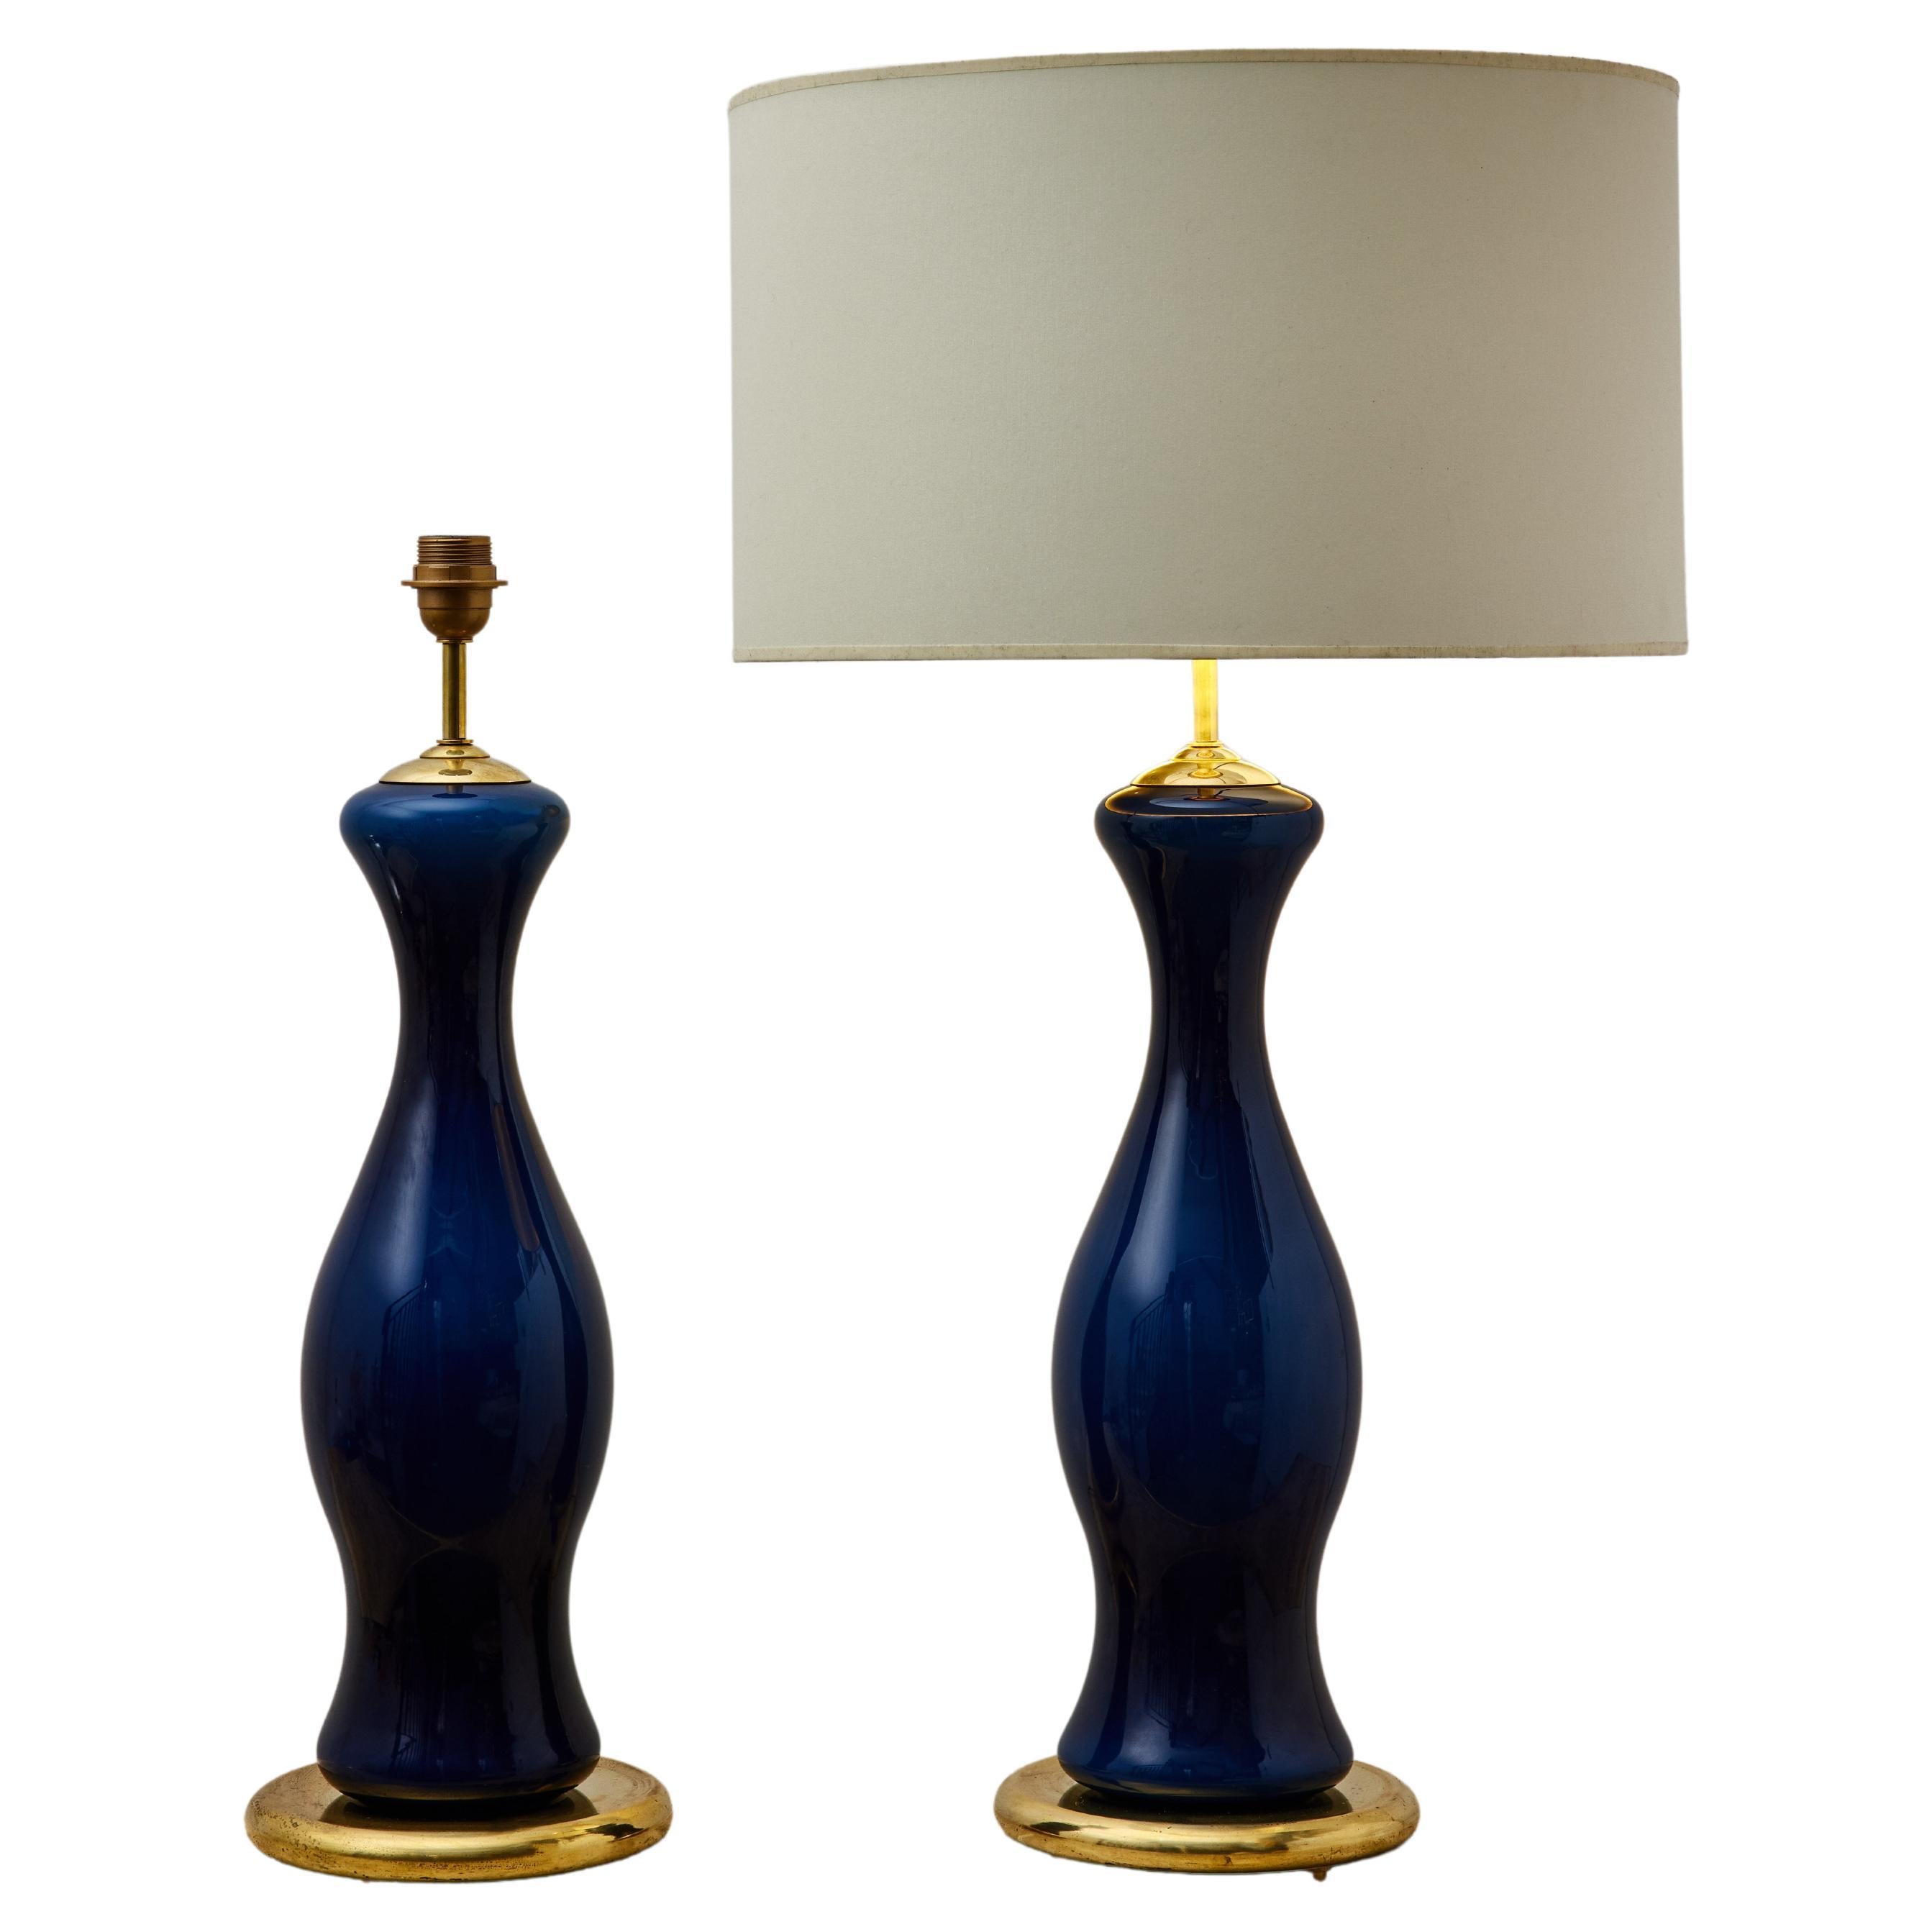 Lampes de table en verre de Murano au prix abordable